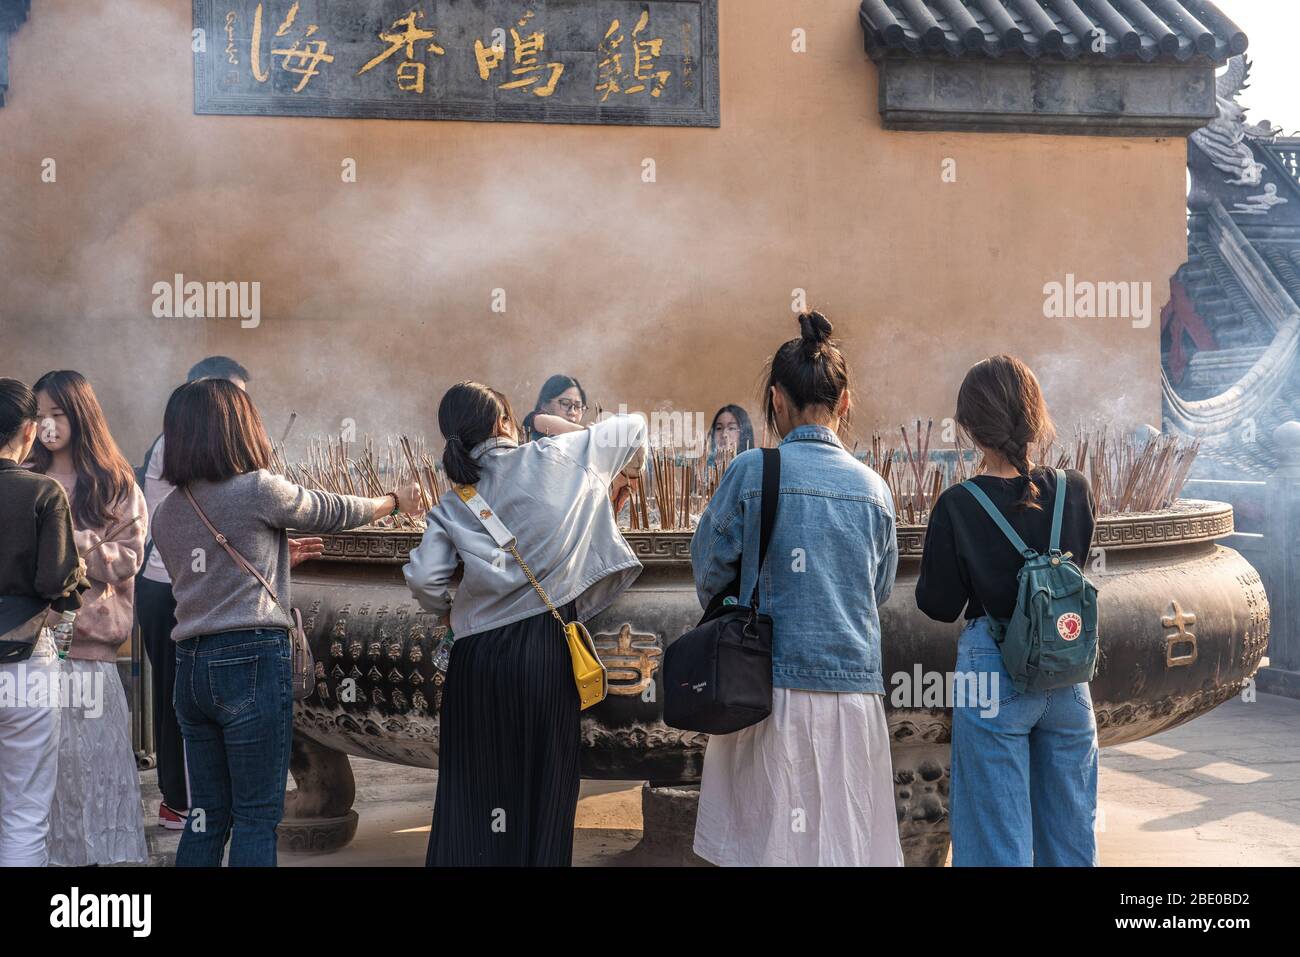 NANJING, CHINA - NOVEMBER 08: People burning incense sticks at Jiming Temple, a famous buddhist temple on November 08, 2019 in Nanjing Stock Photo